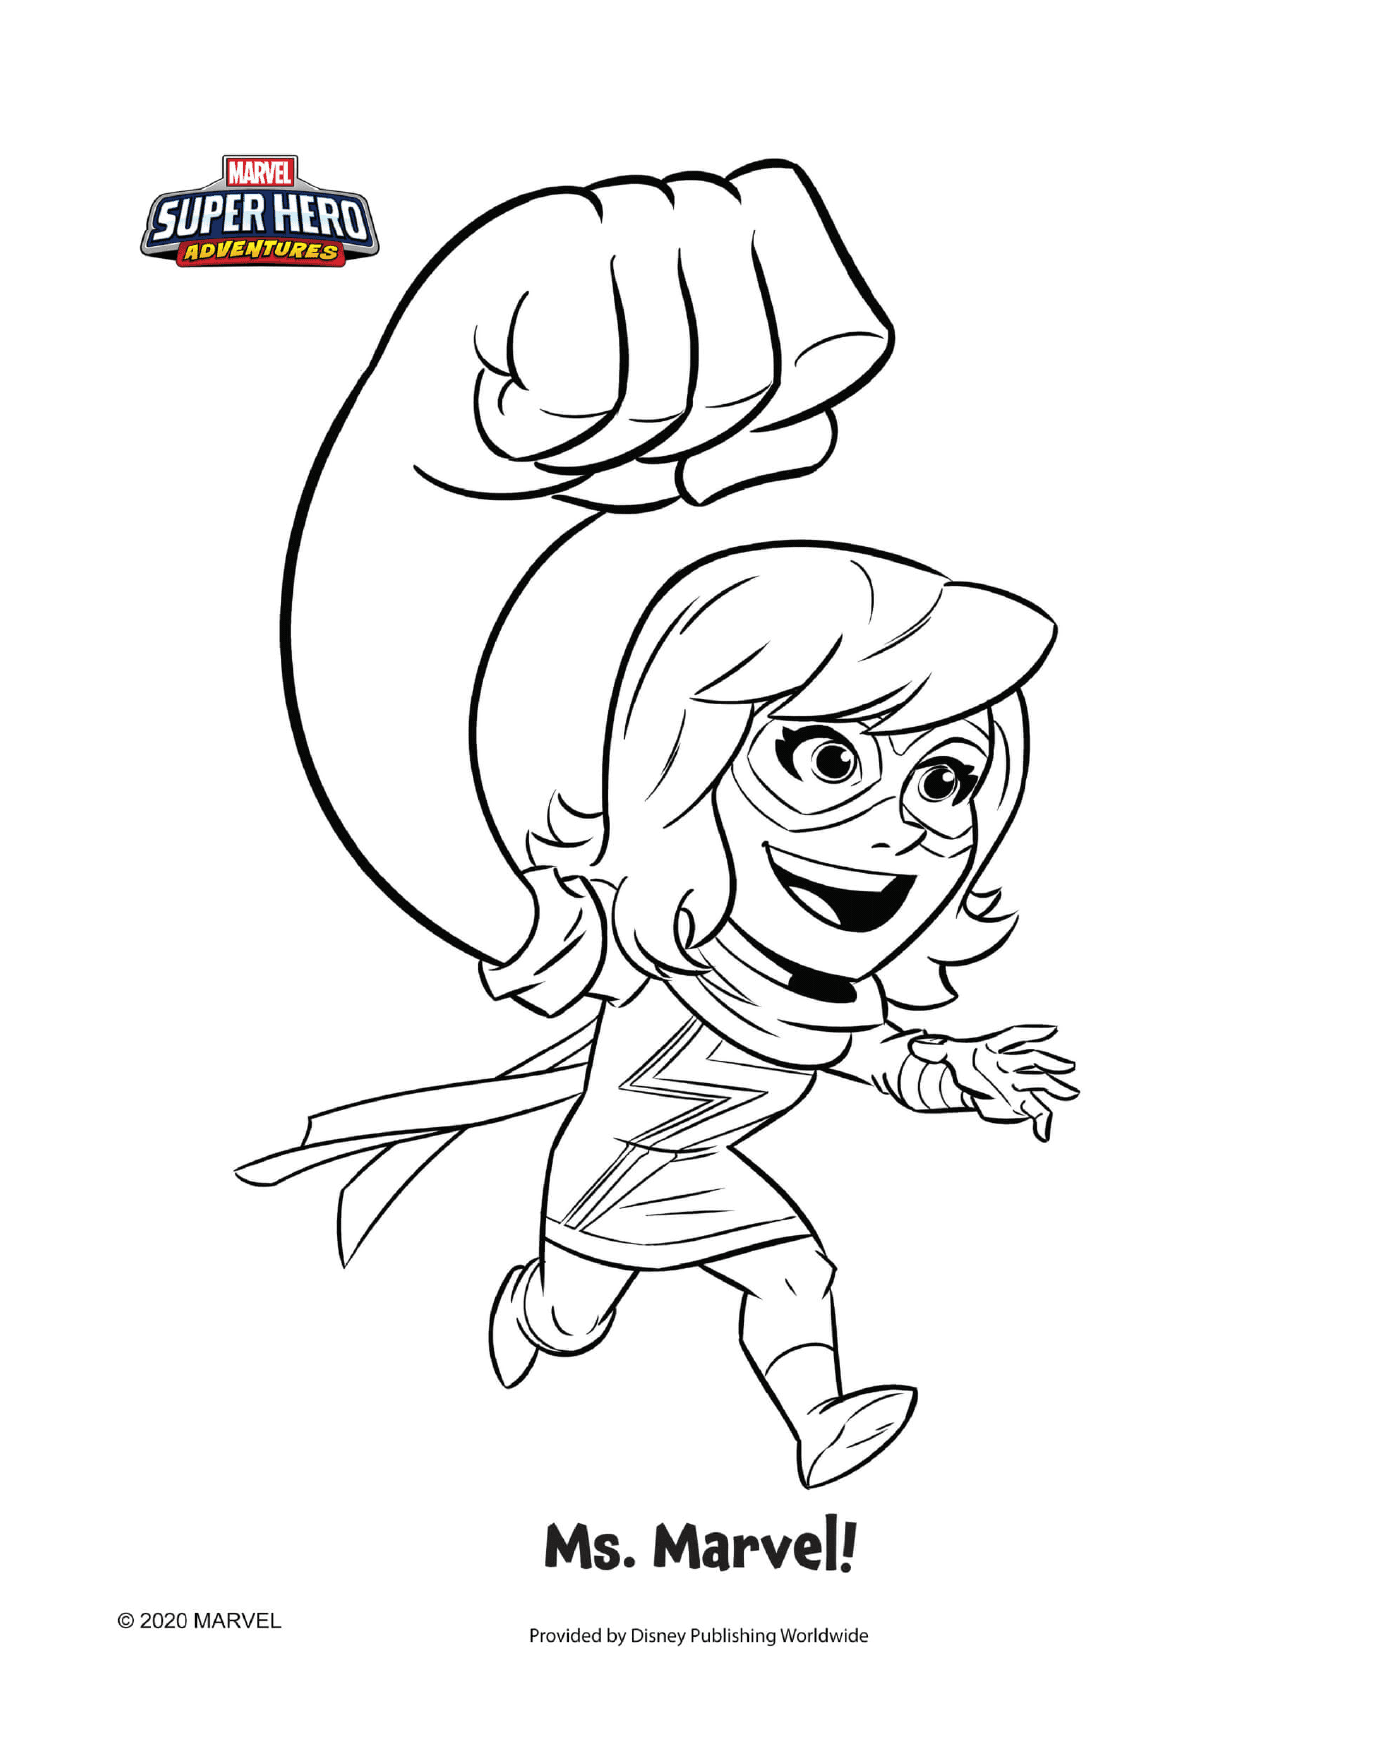   Ms Marvel, une super-héroïne 